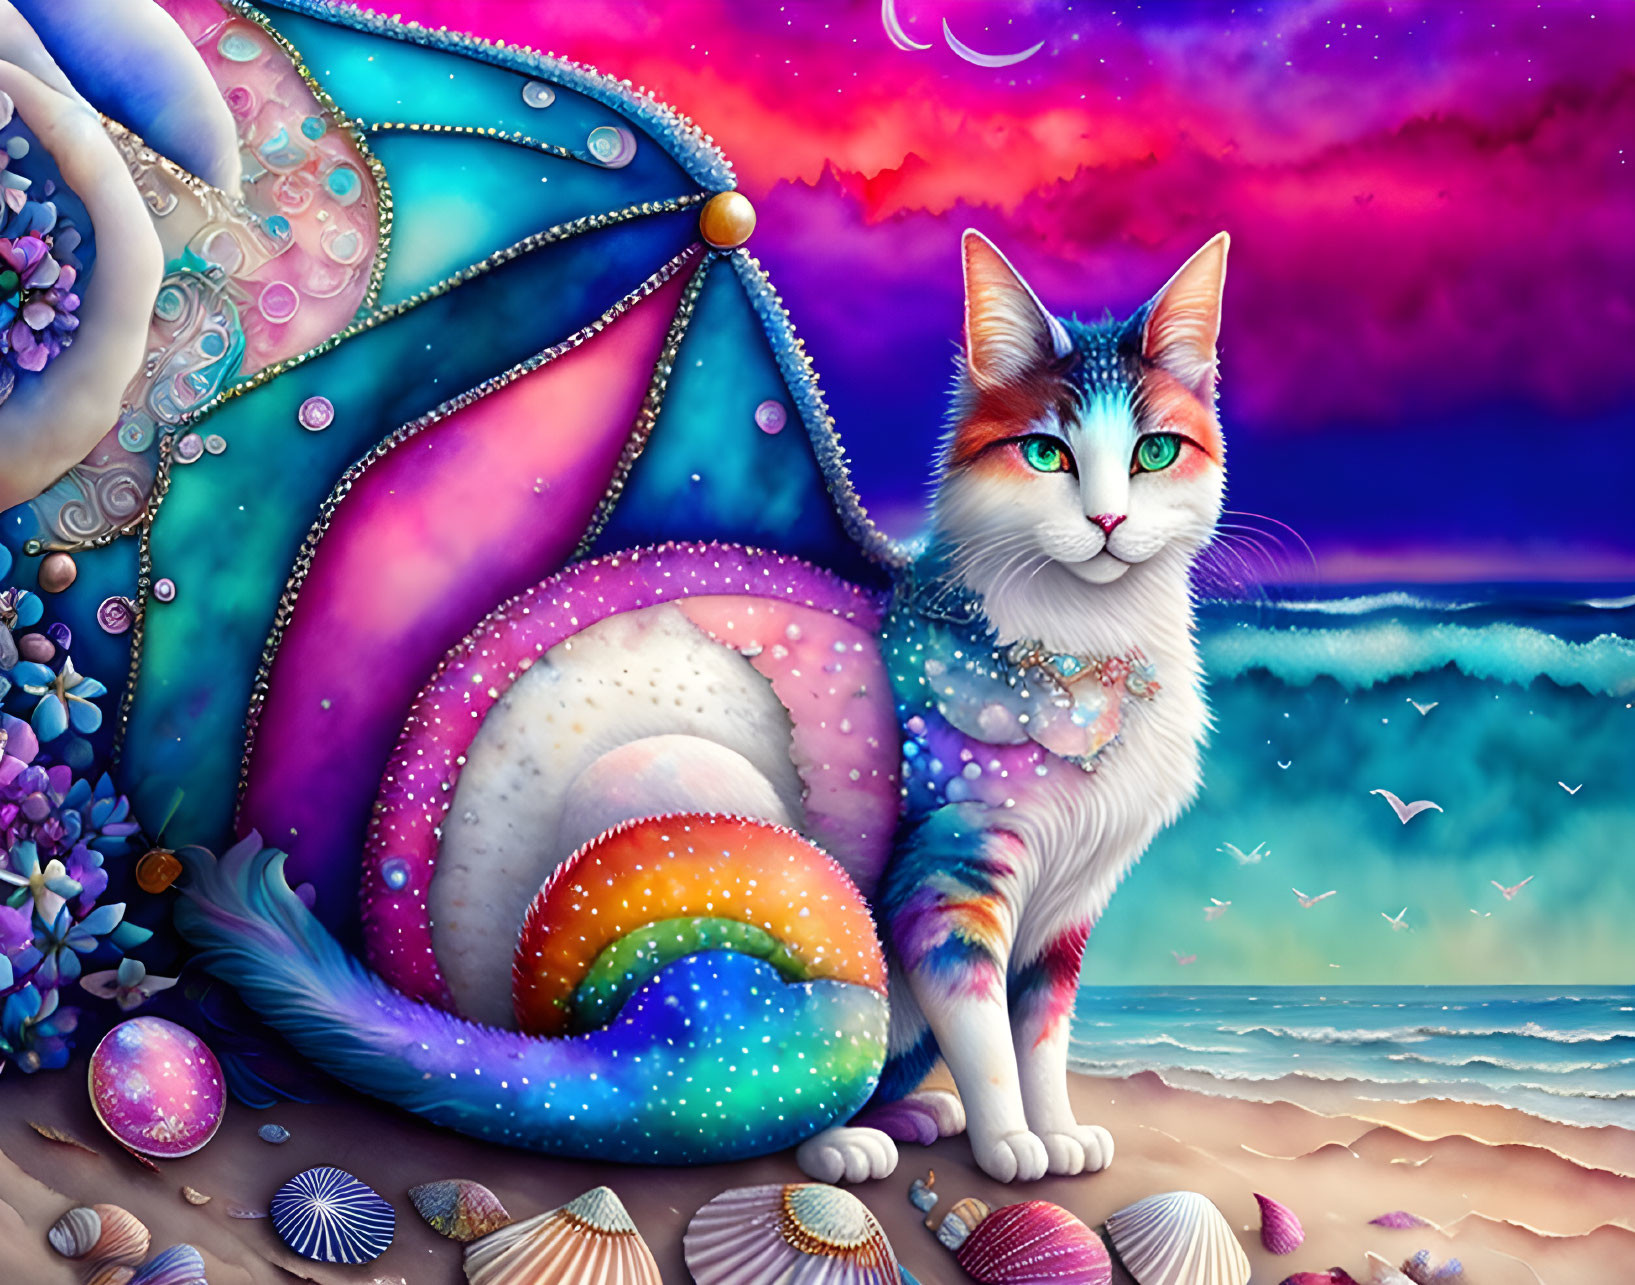 Vibrant fantasy cat on beach under magical starry sky